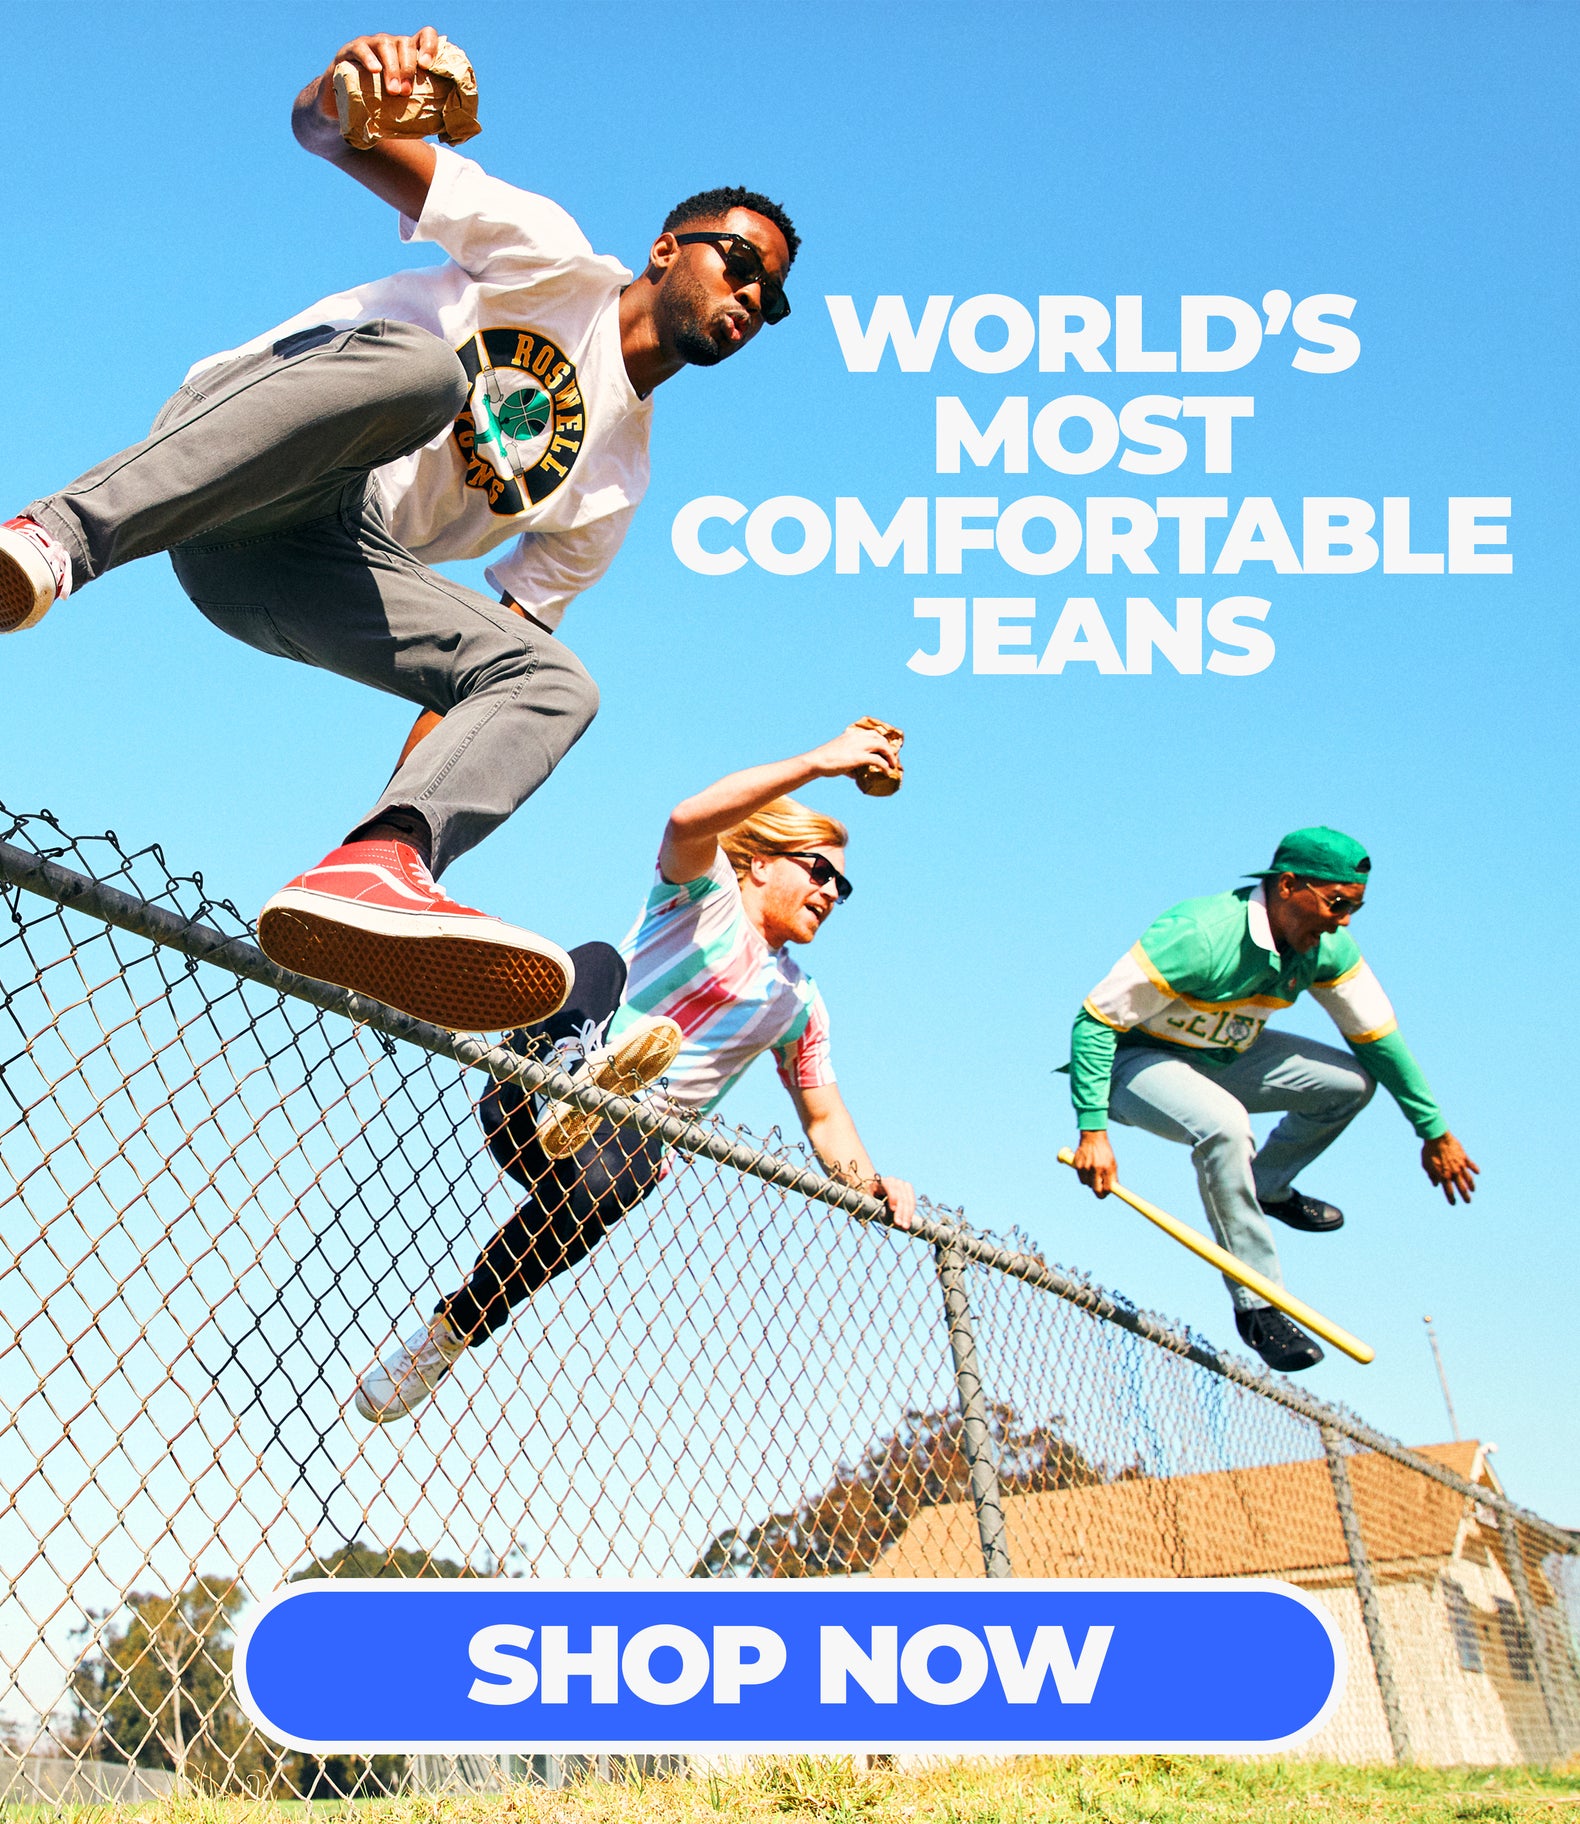 Mugsy  Comfortable Stretchy Men's Jeans, Chinos & Shirts